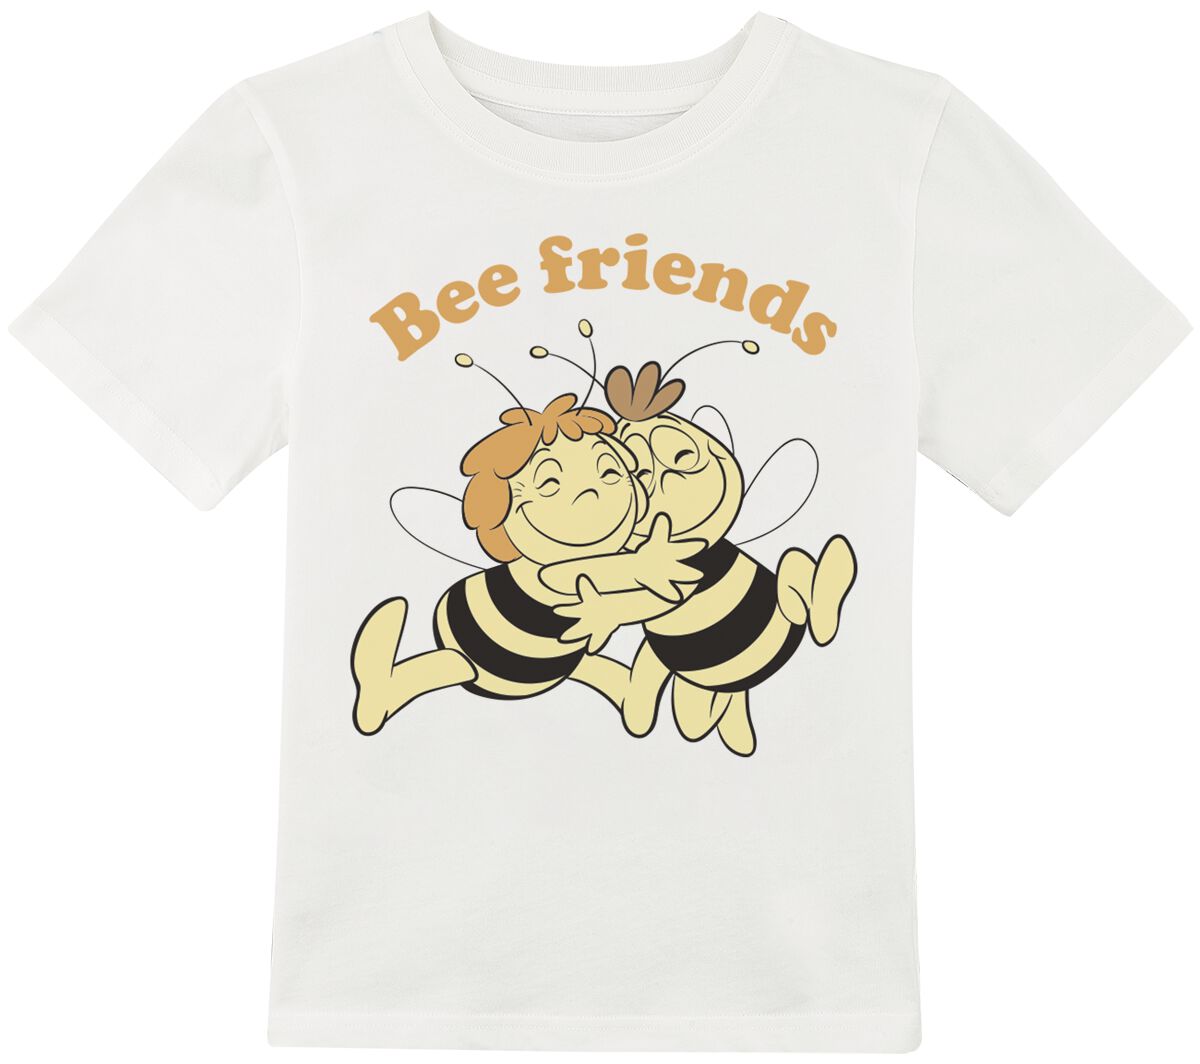 Die Biene Maja - Kids - Bee Friends - T-Shirt - altweiß - EMP Exklusiv!